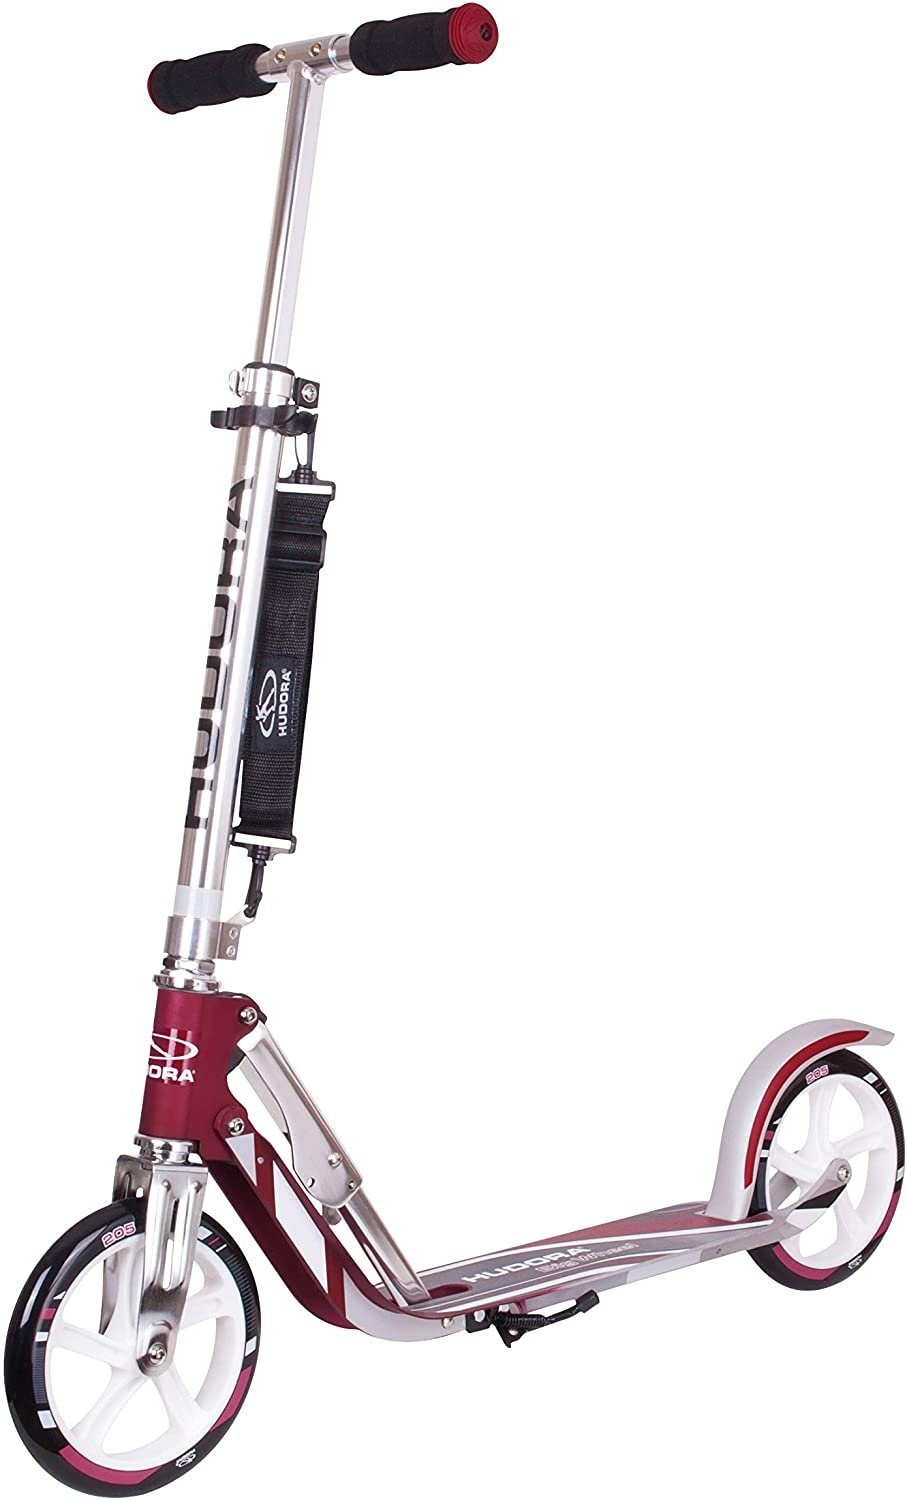 Scooter Tretroller Cityroller 205 Pro Roller Technologie / Tretroller magenta BigWheel silber Hudora RX